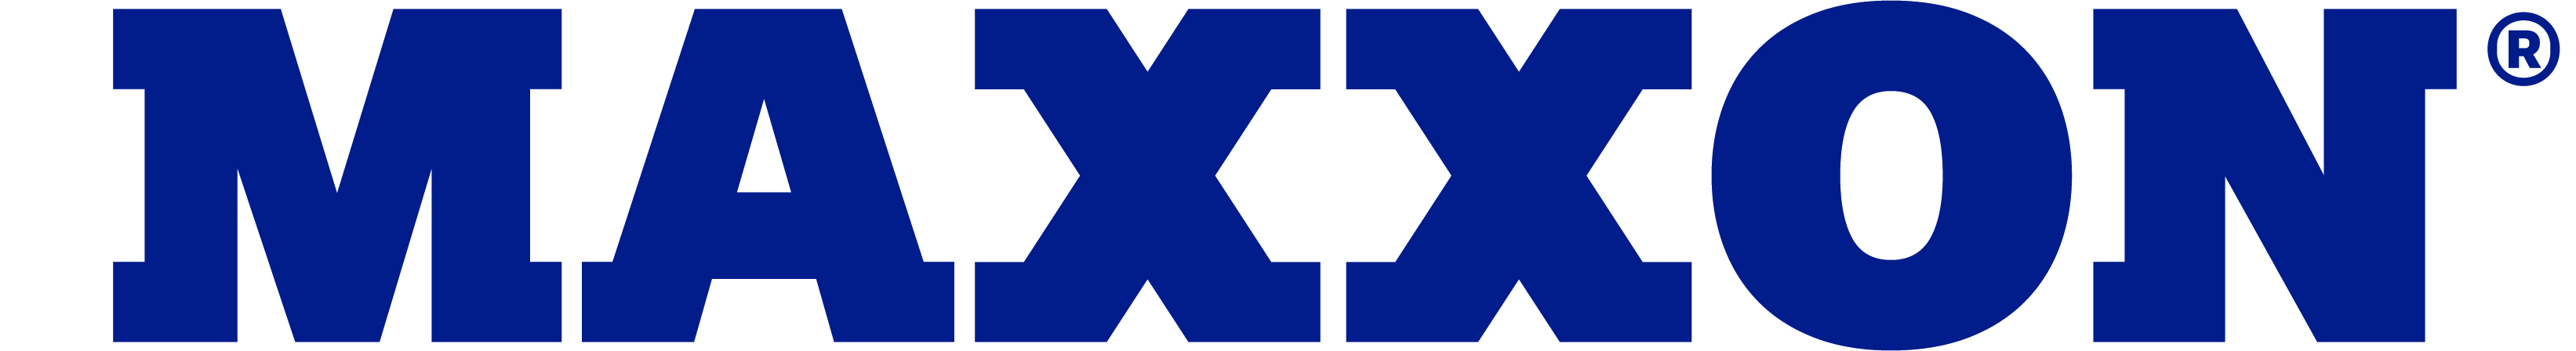 Maxxon_Logo_r-ball_Navy